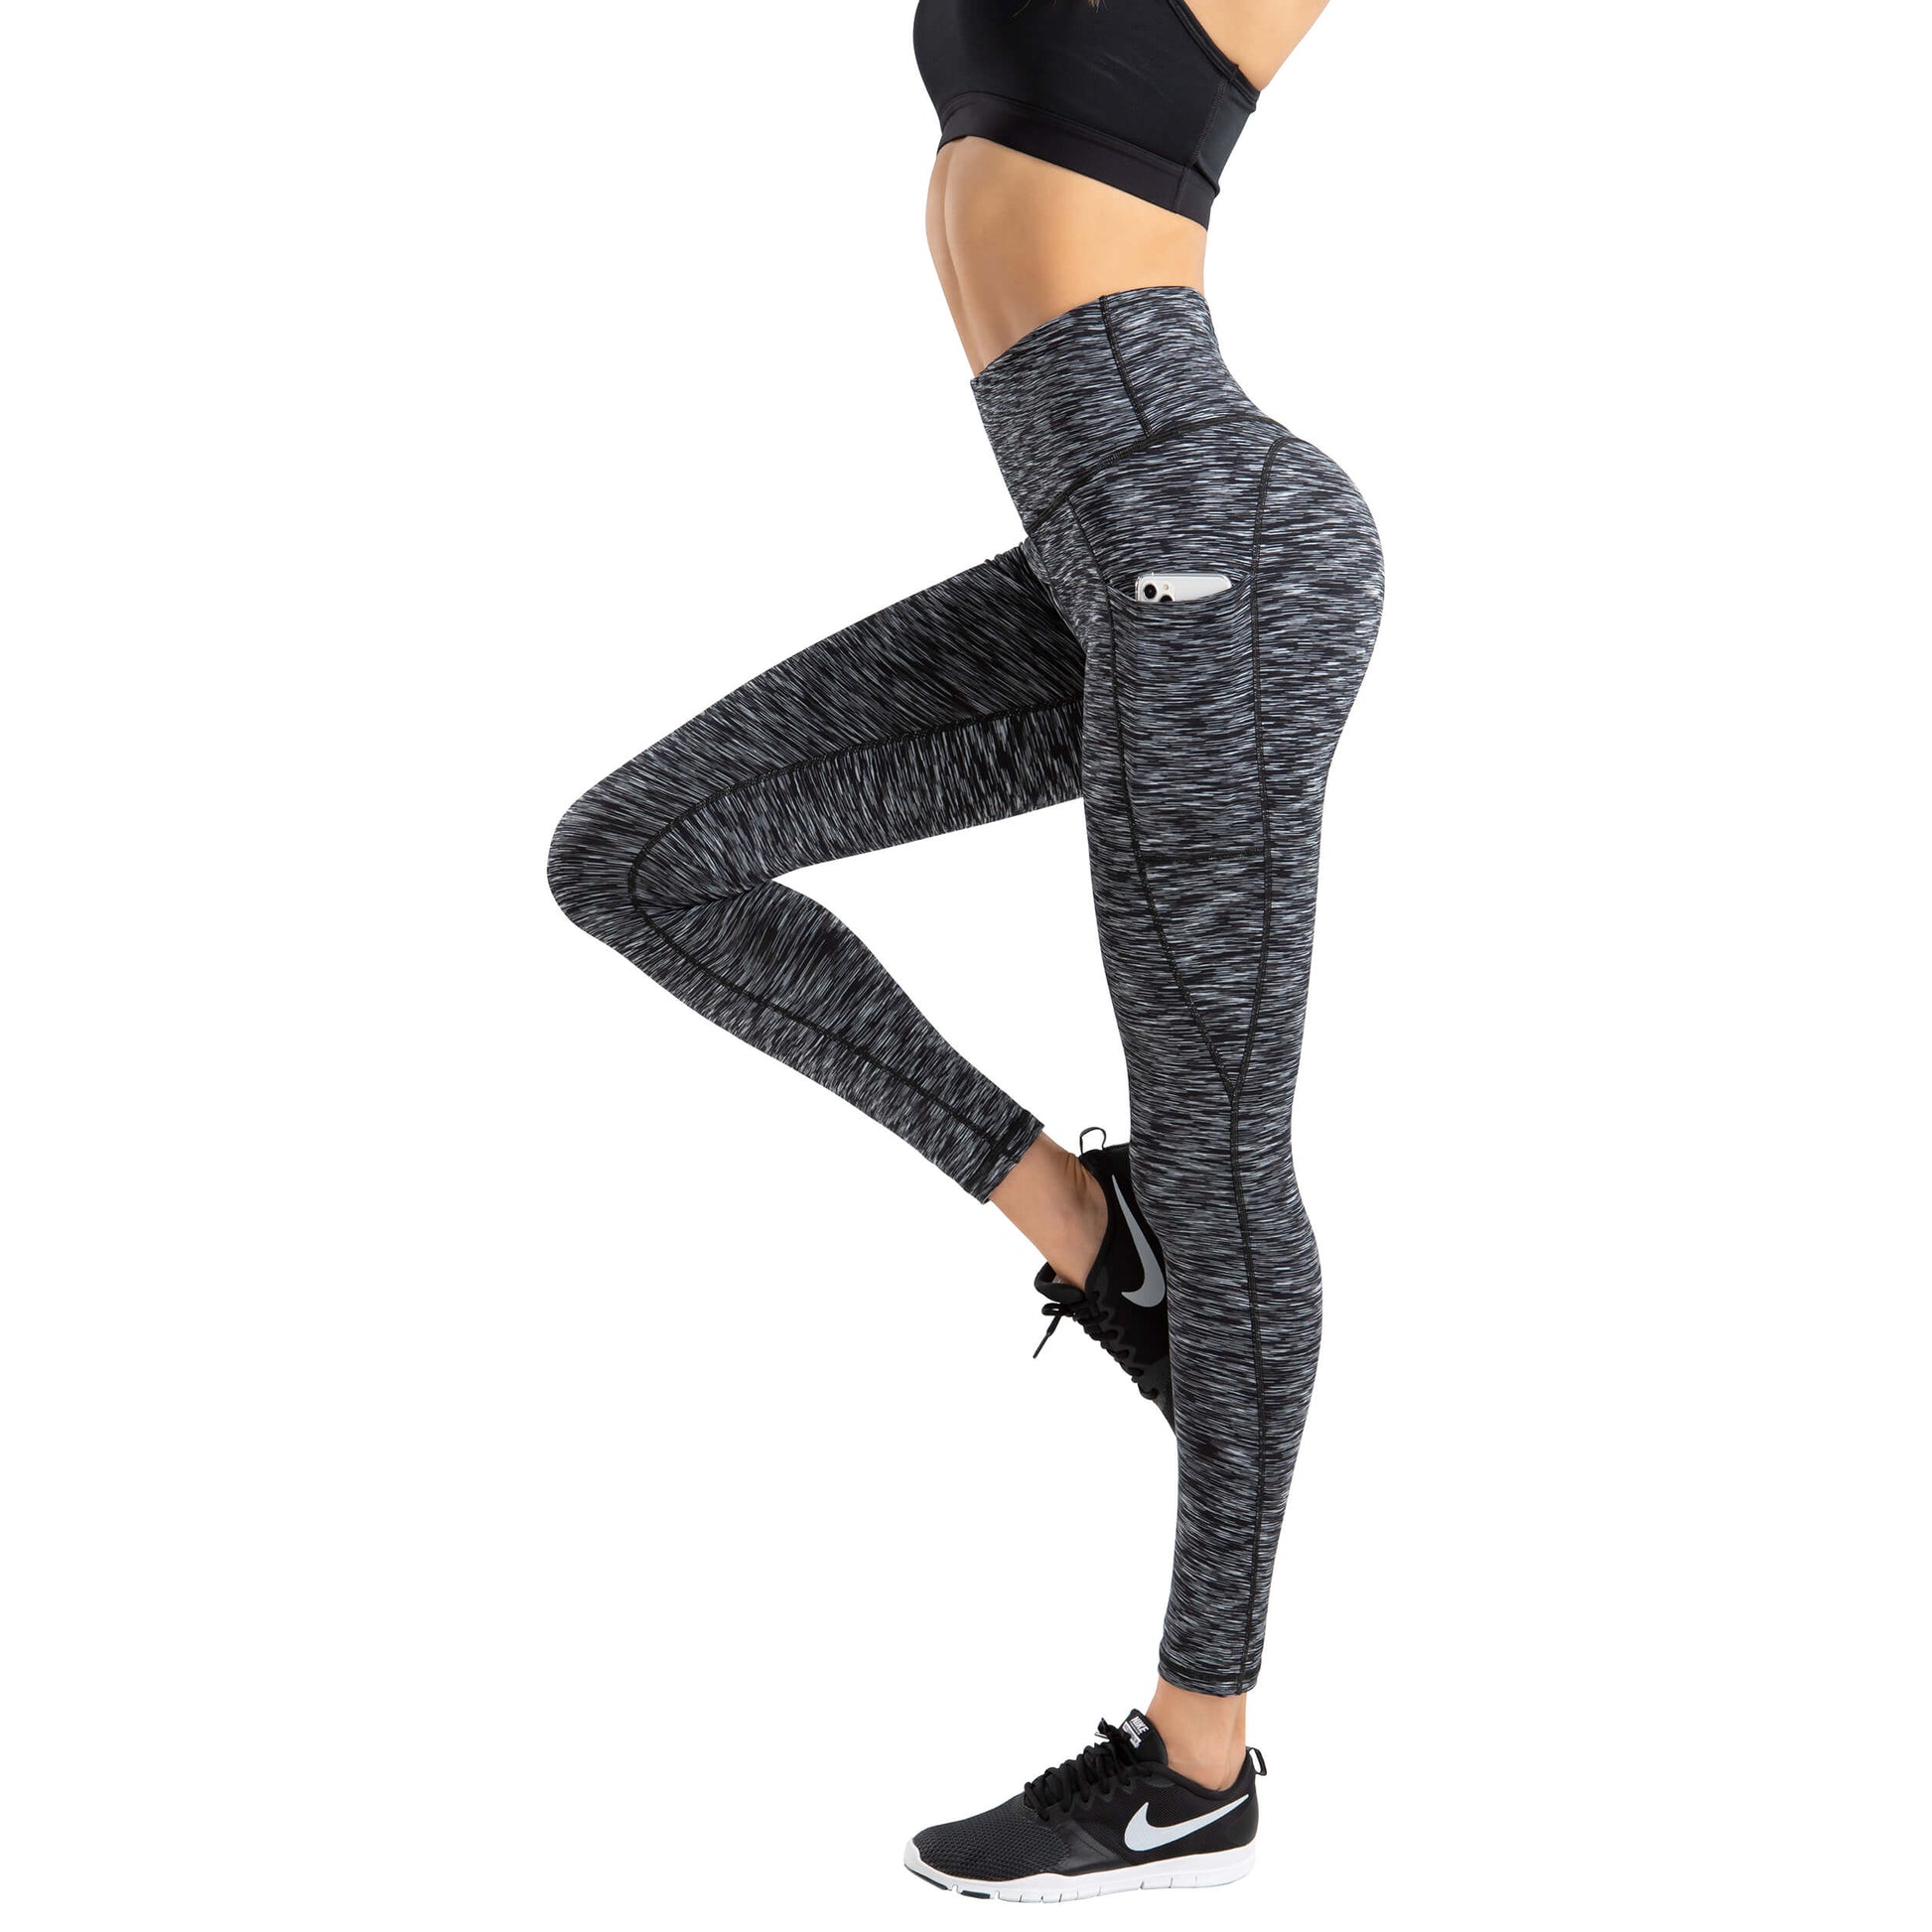 iKeep® High flexibility Yoga Legging with Pockets ikeepyoga